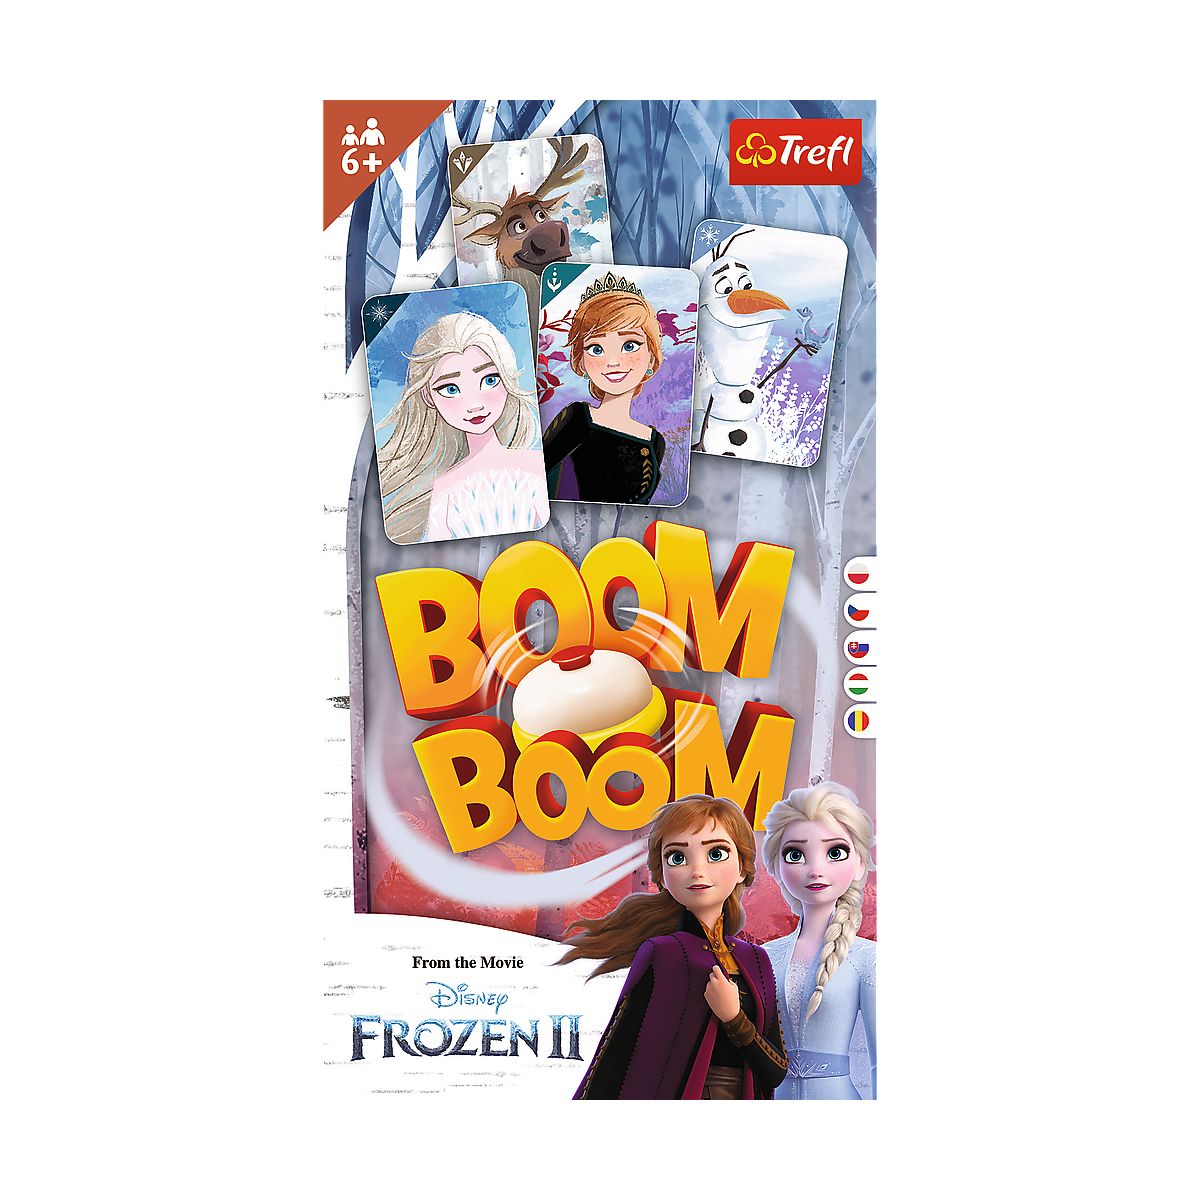 Gra planszowa Trefl Frozen 2 Boom Boom  - Kraina Lodu 2 (01912)